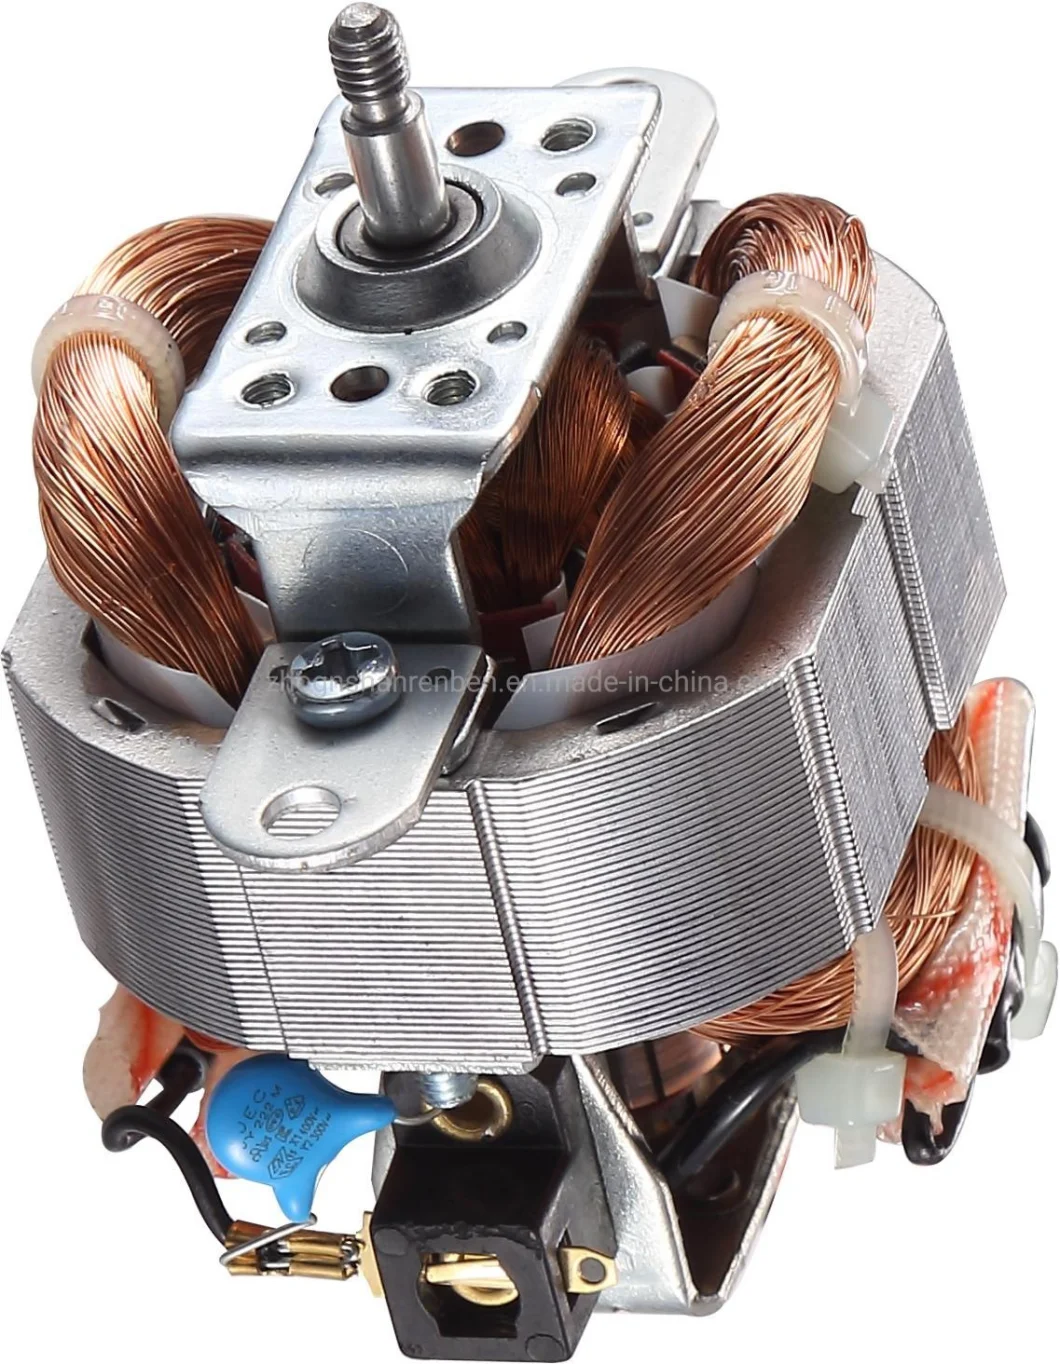 5415 Pure Copper Low Noise Big Power Universal Motor Hair Dryer Grinder AC Motor